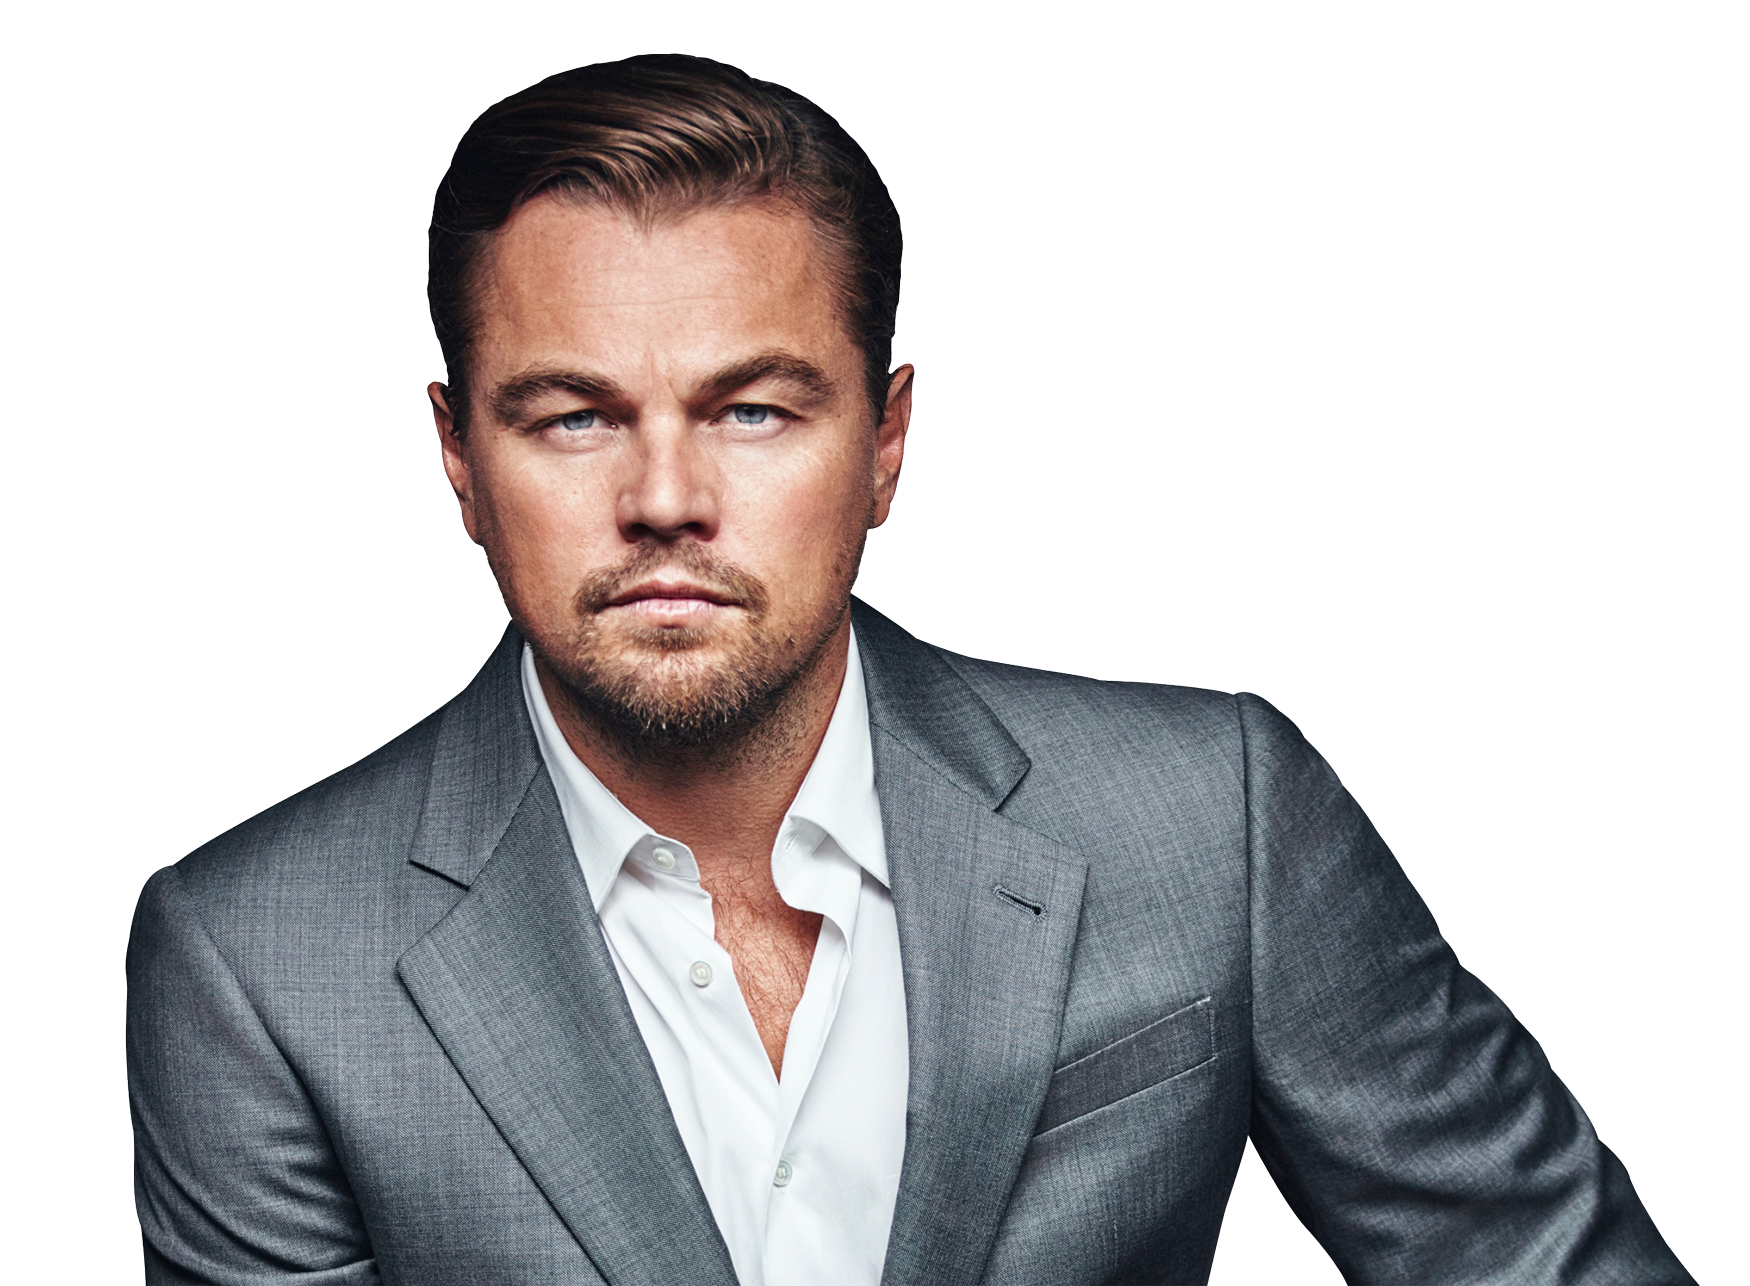 Important: Leonardo DiCaprio 